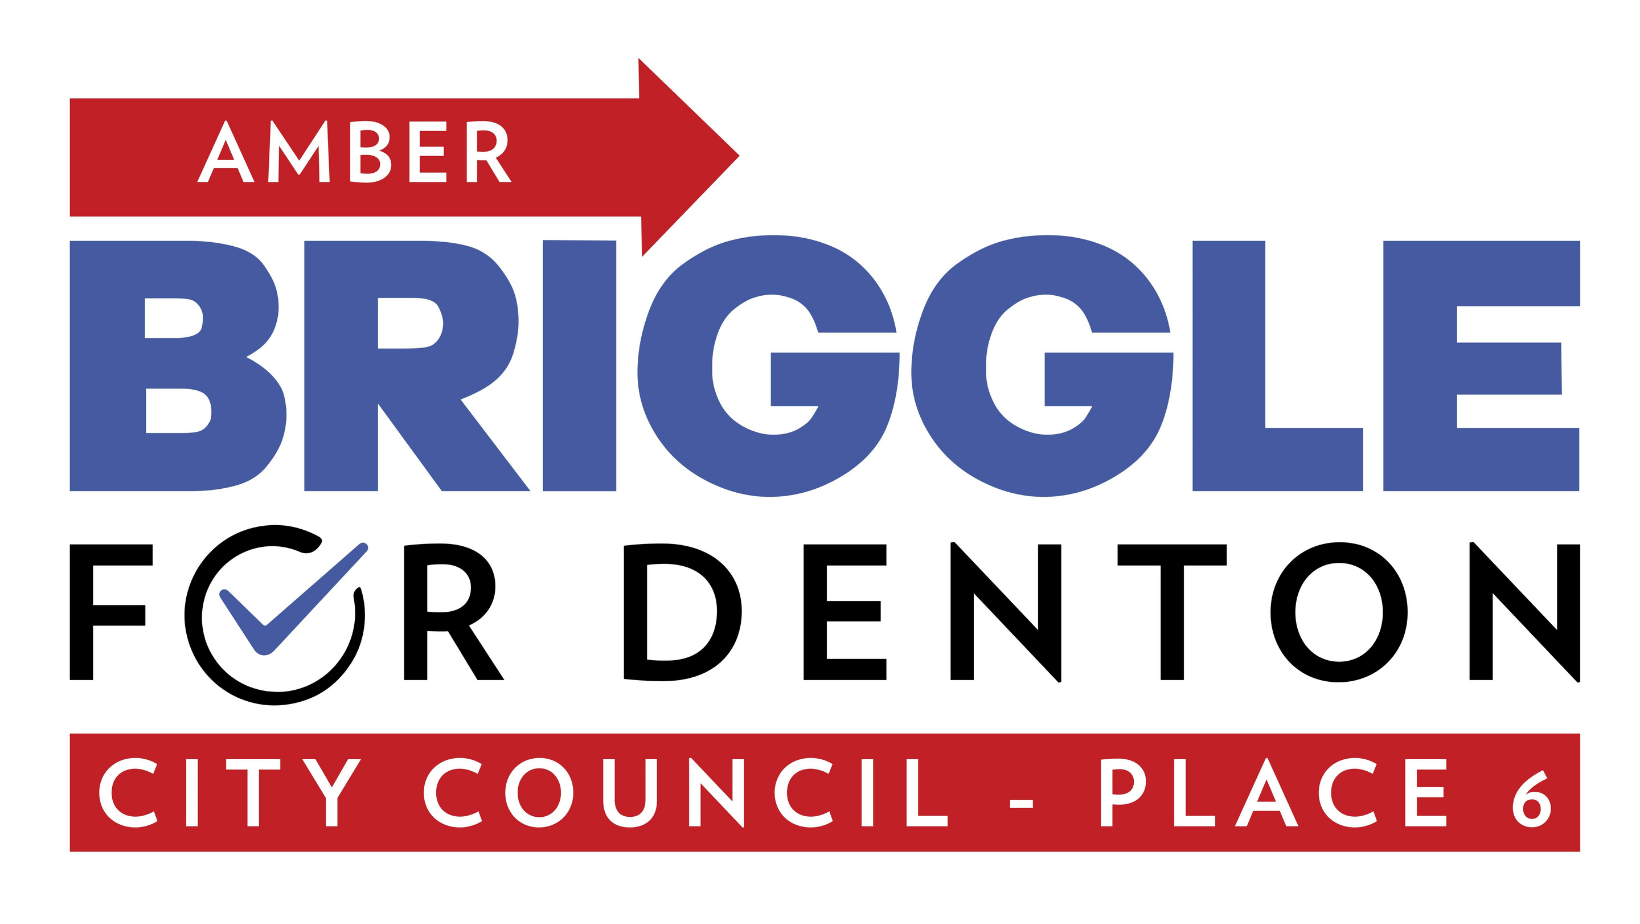 Amber Briggle for Denton logo